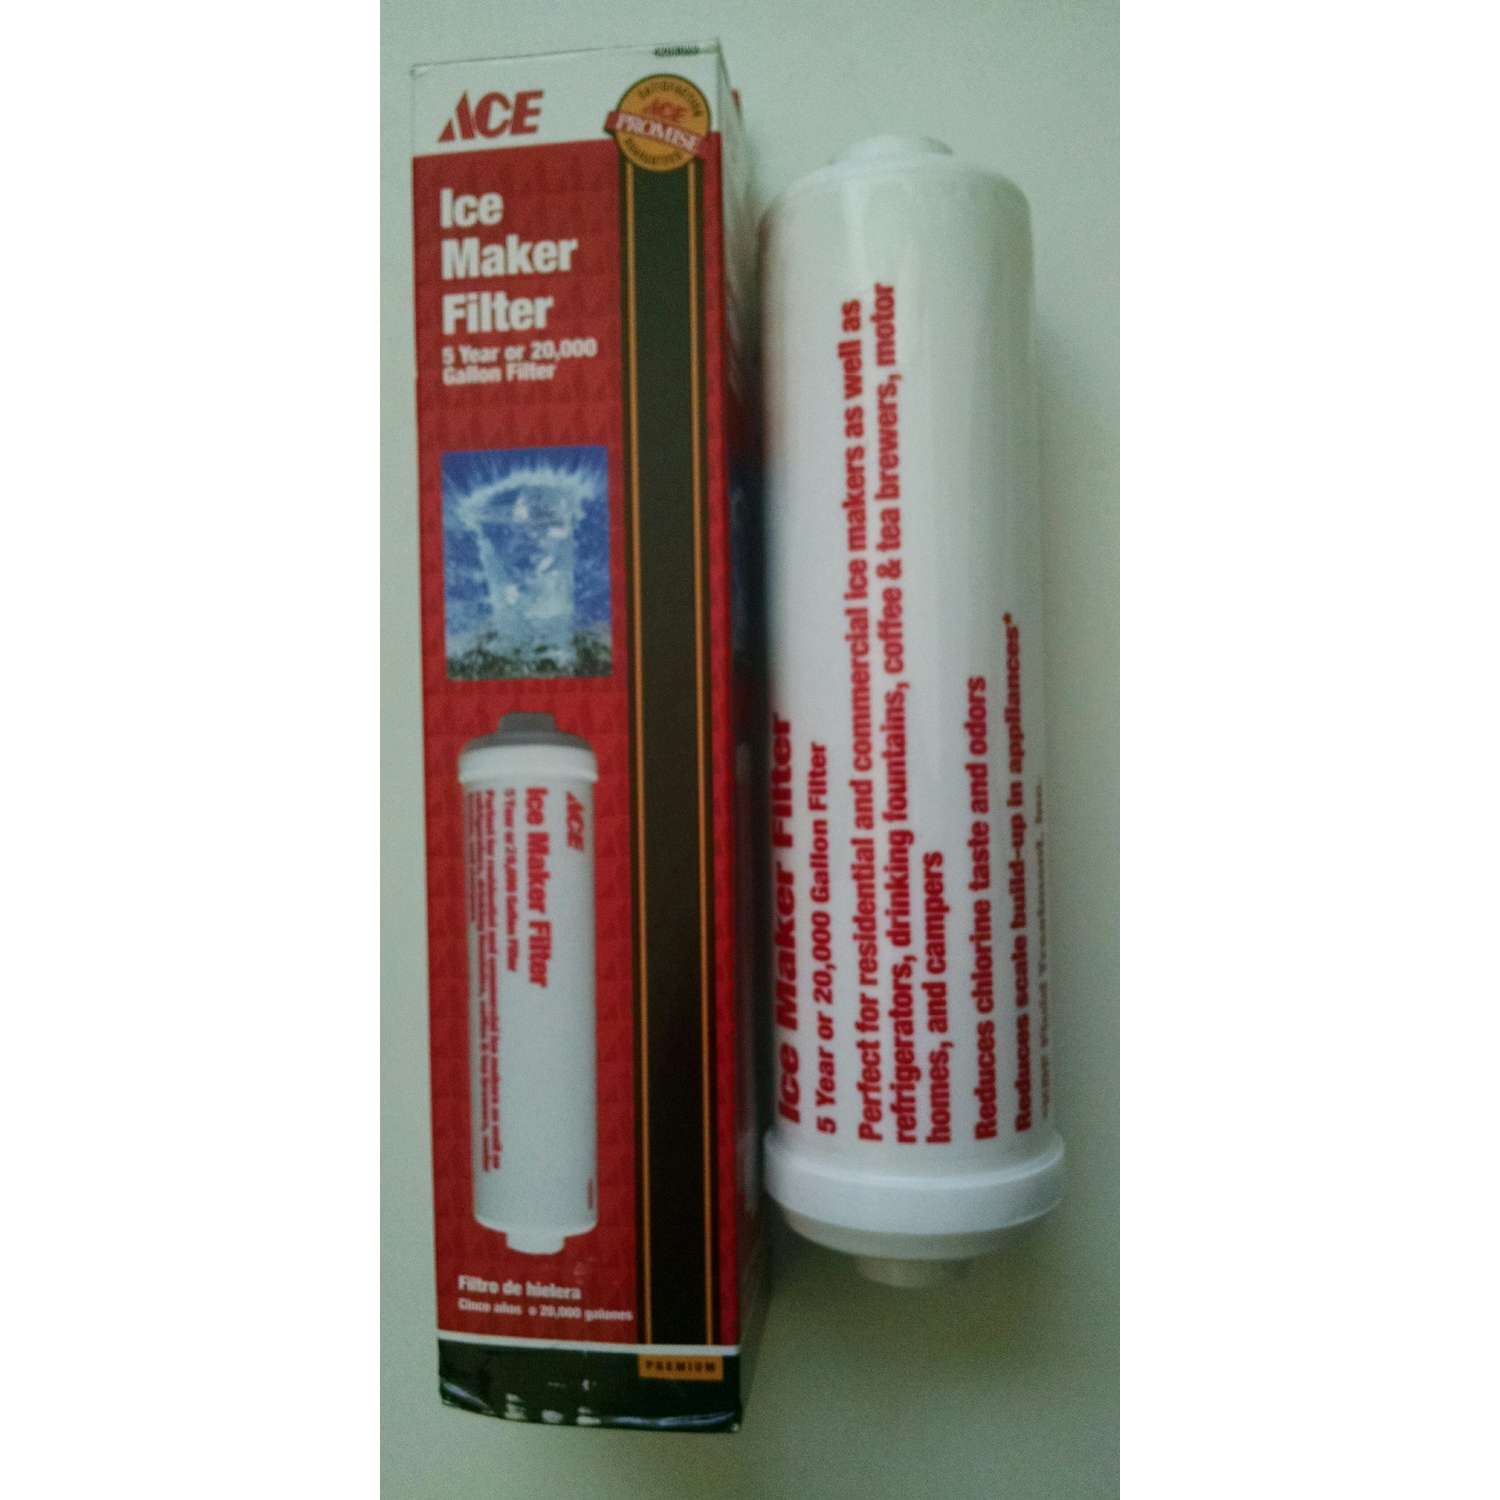 Ace Ice Maker Filter